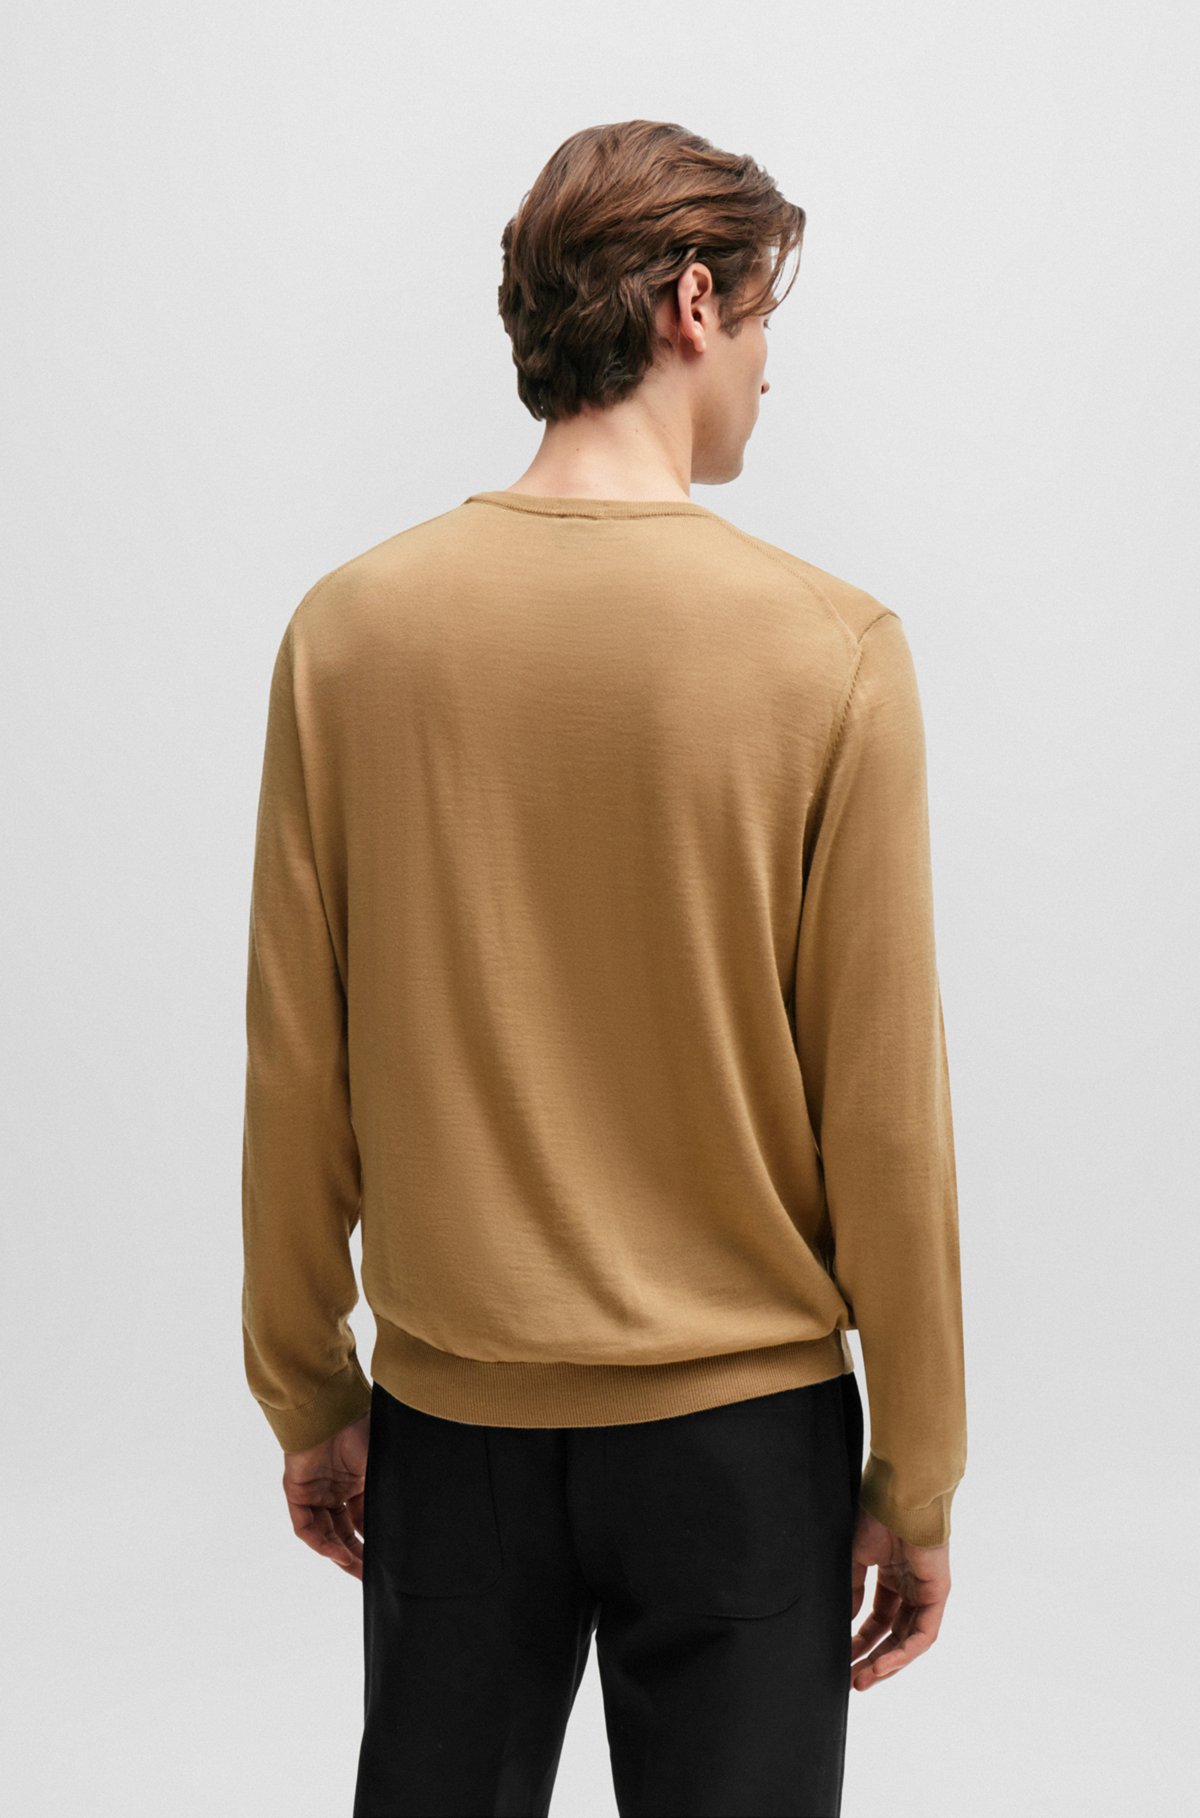 Slim-fit sweater in virgin wool with crew neckline, Beige